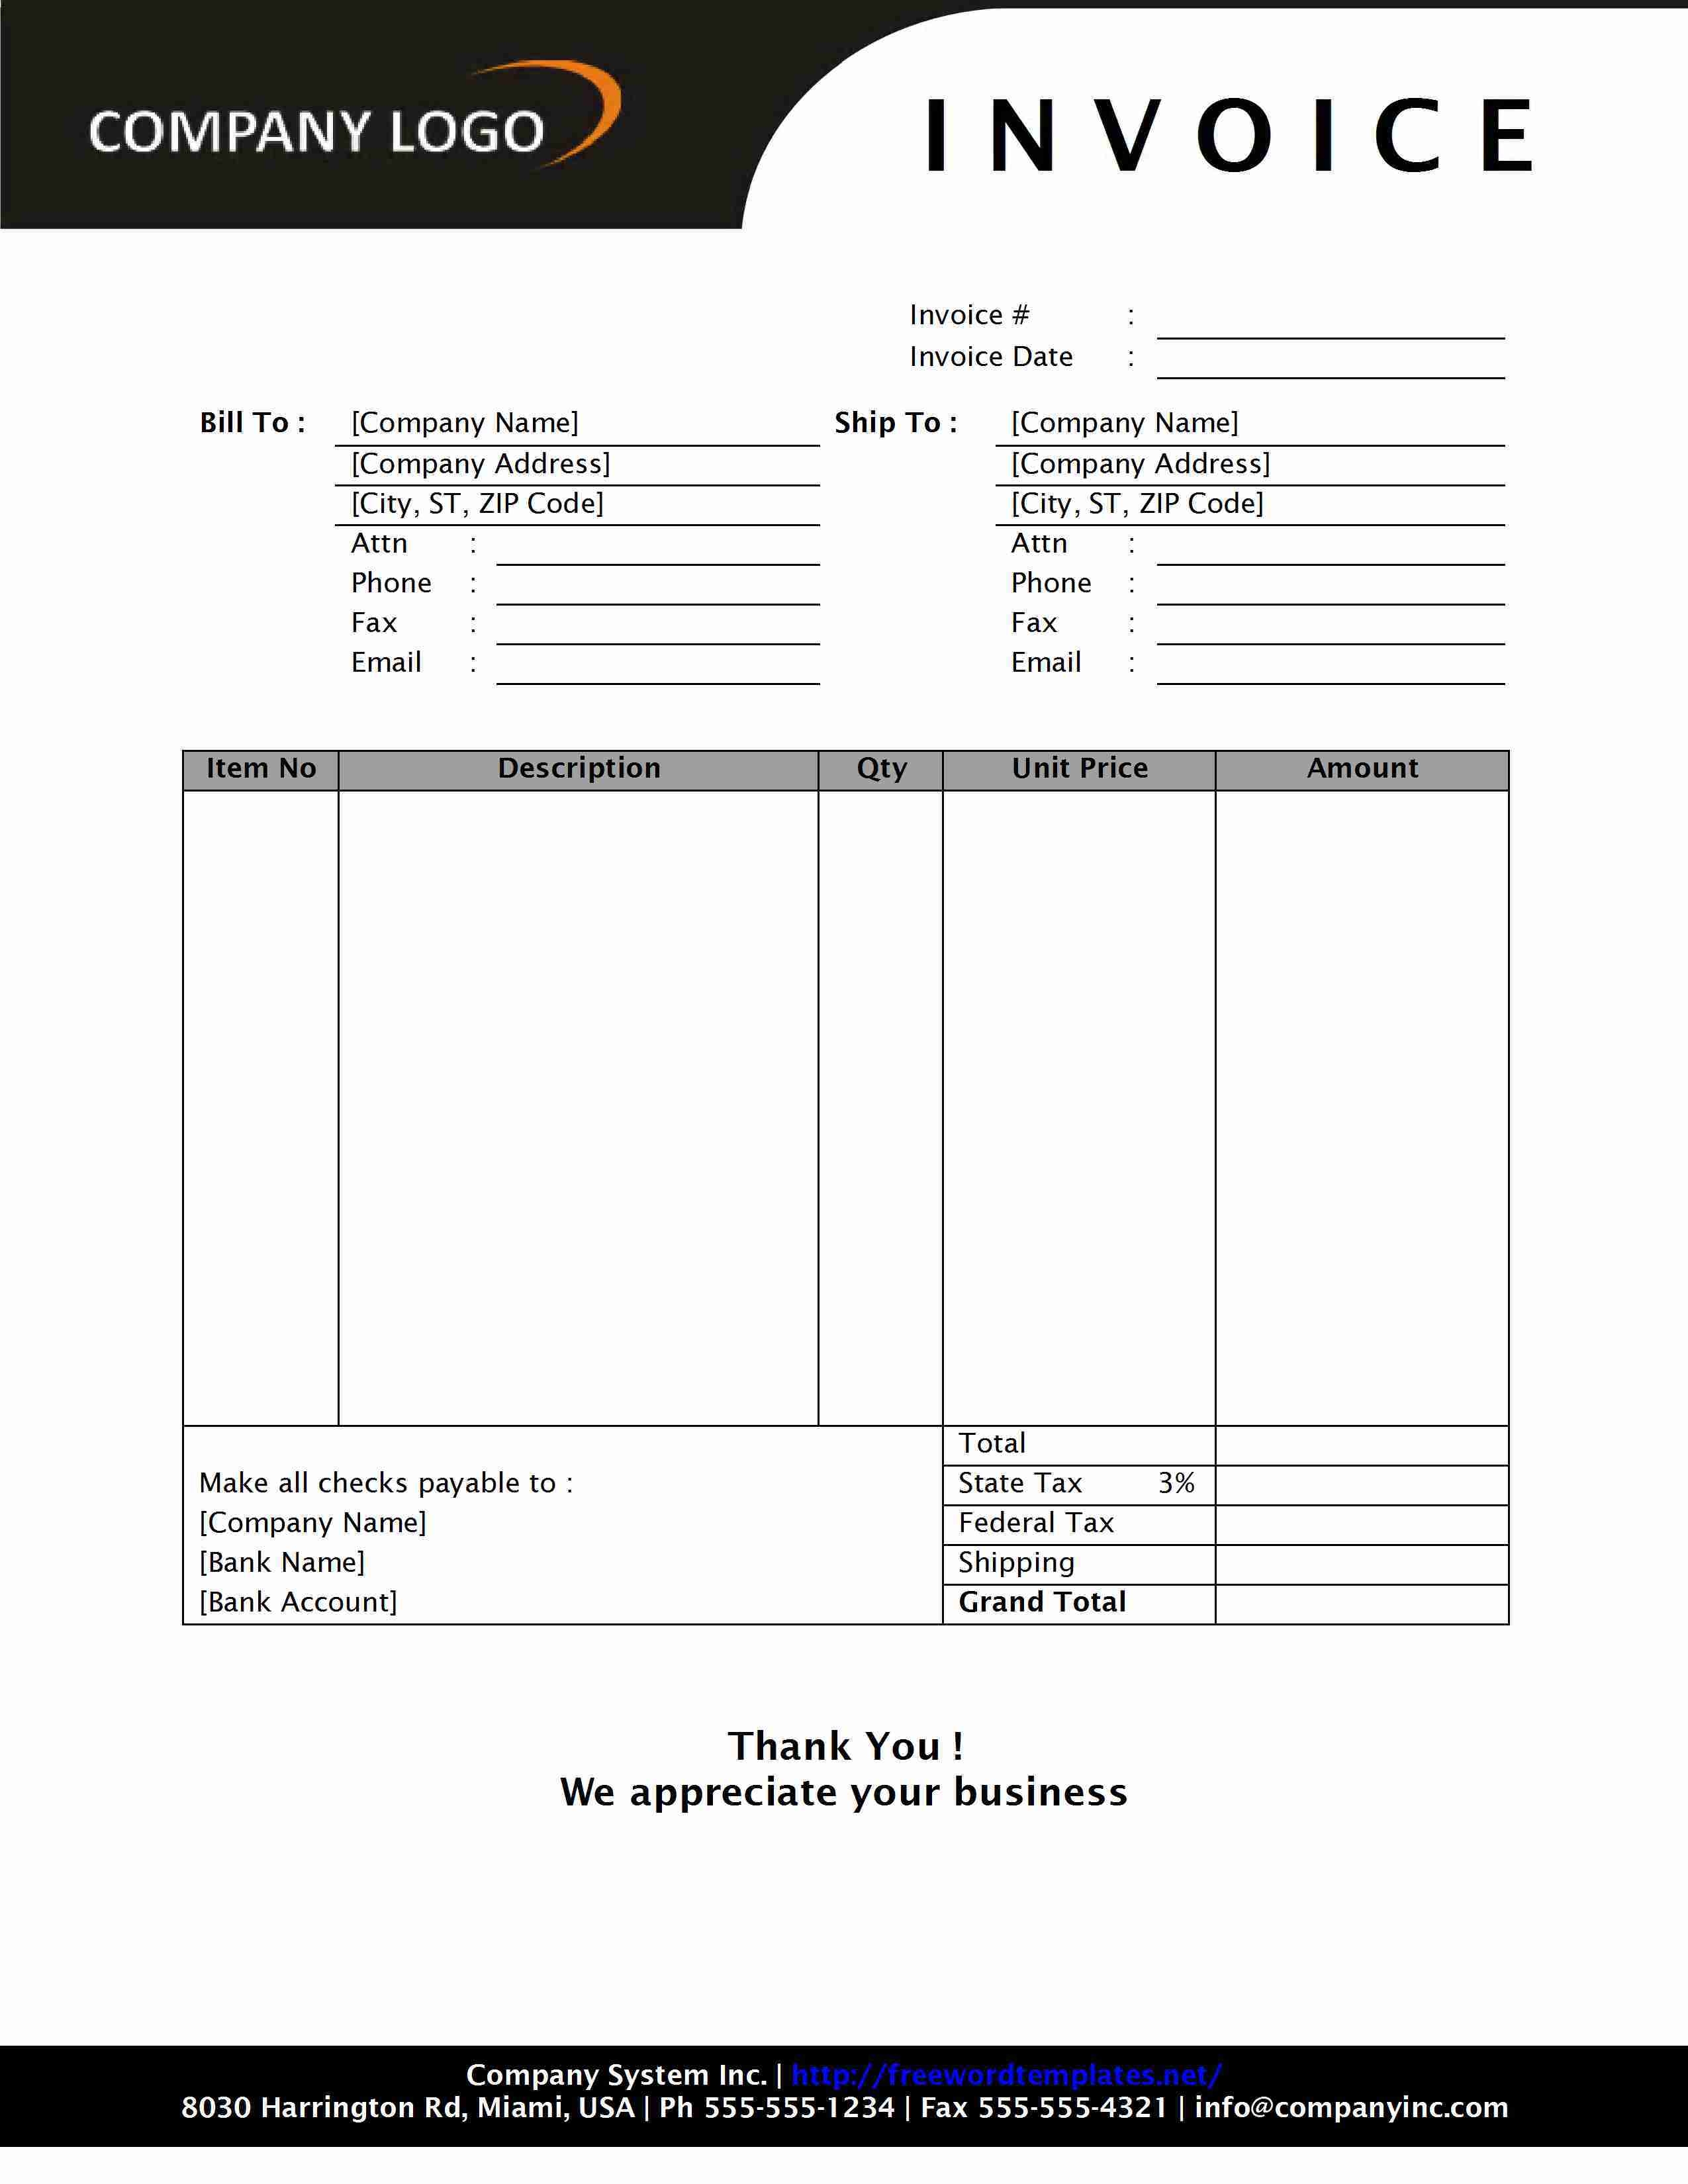 invoice creator pdf invoice creator customize invoice pdf layout simple invoice creator